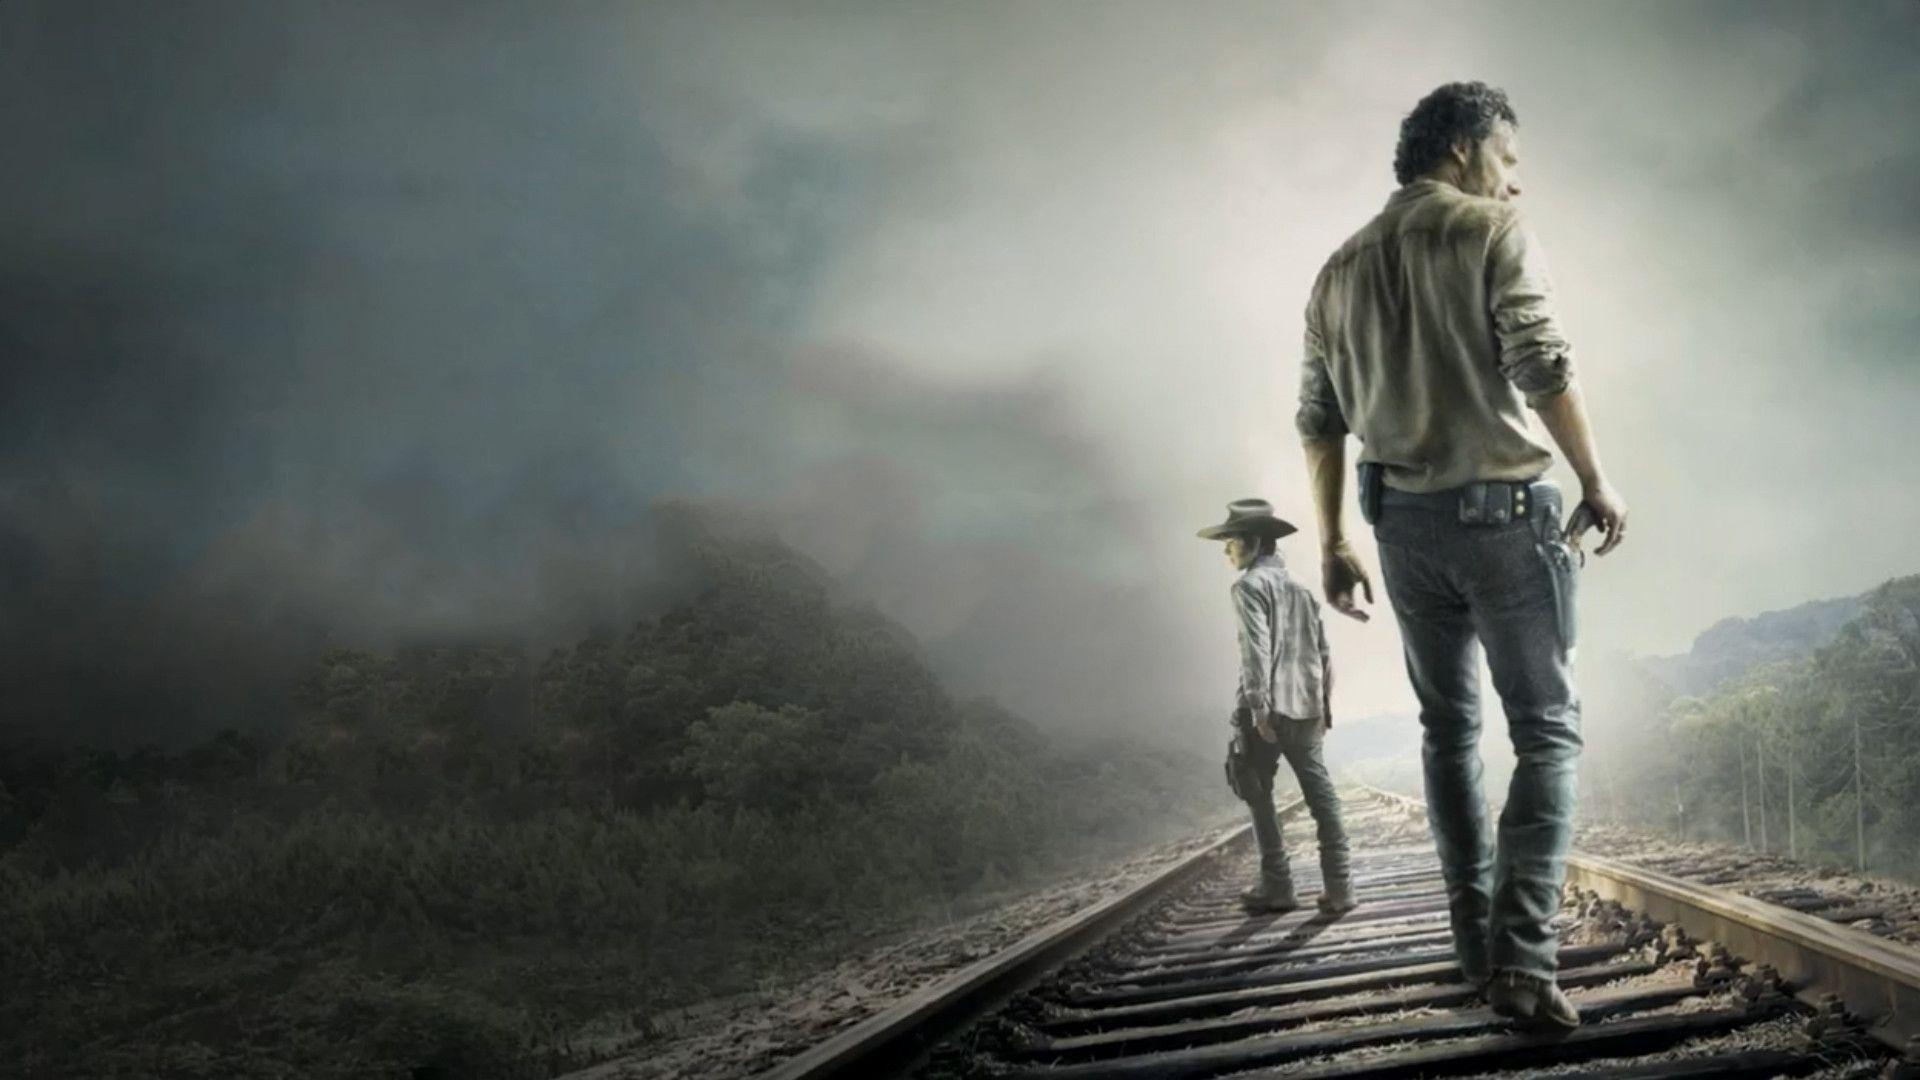 Movies The Walking Dead Season 4 wallpaper Desktop, Phone, Tablet